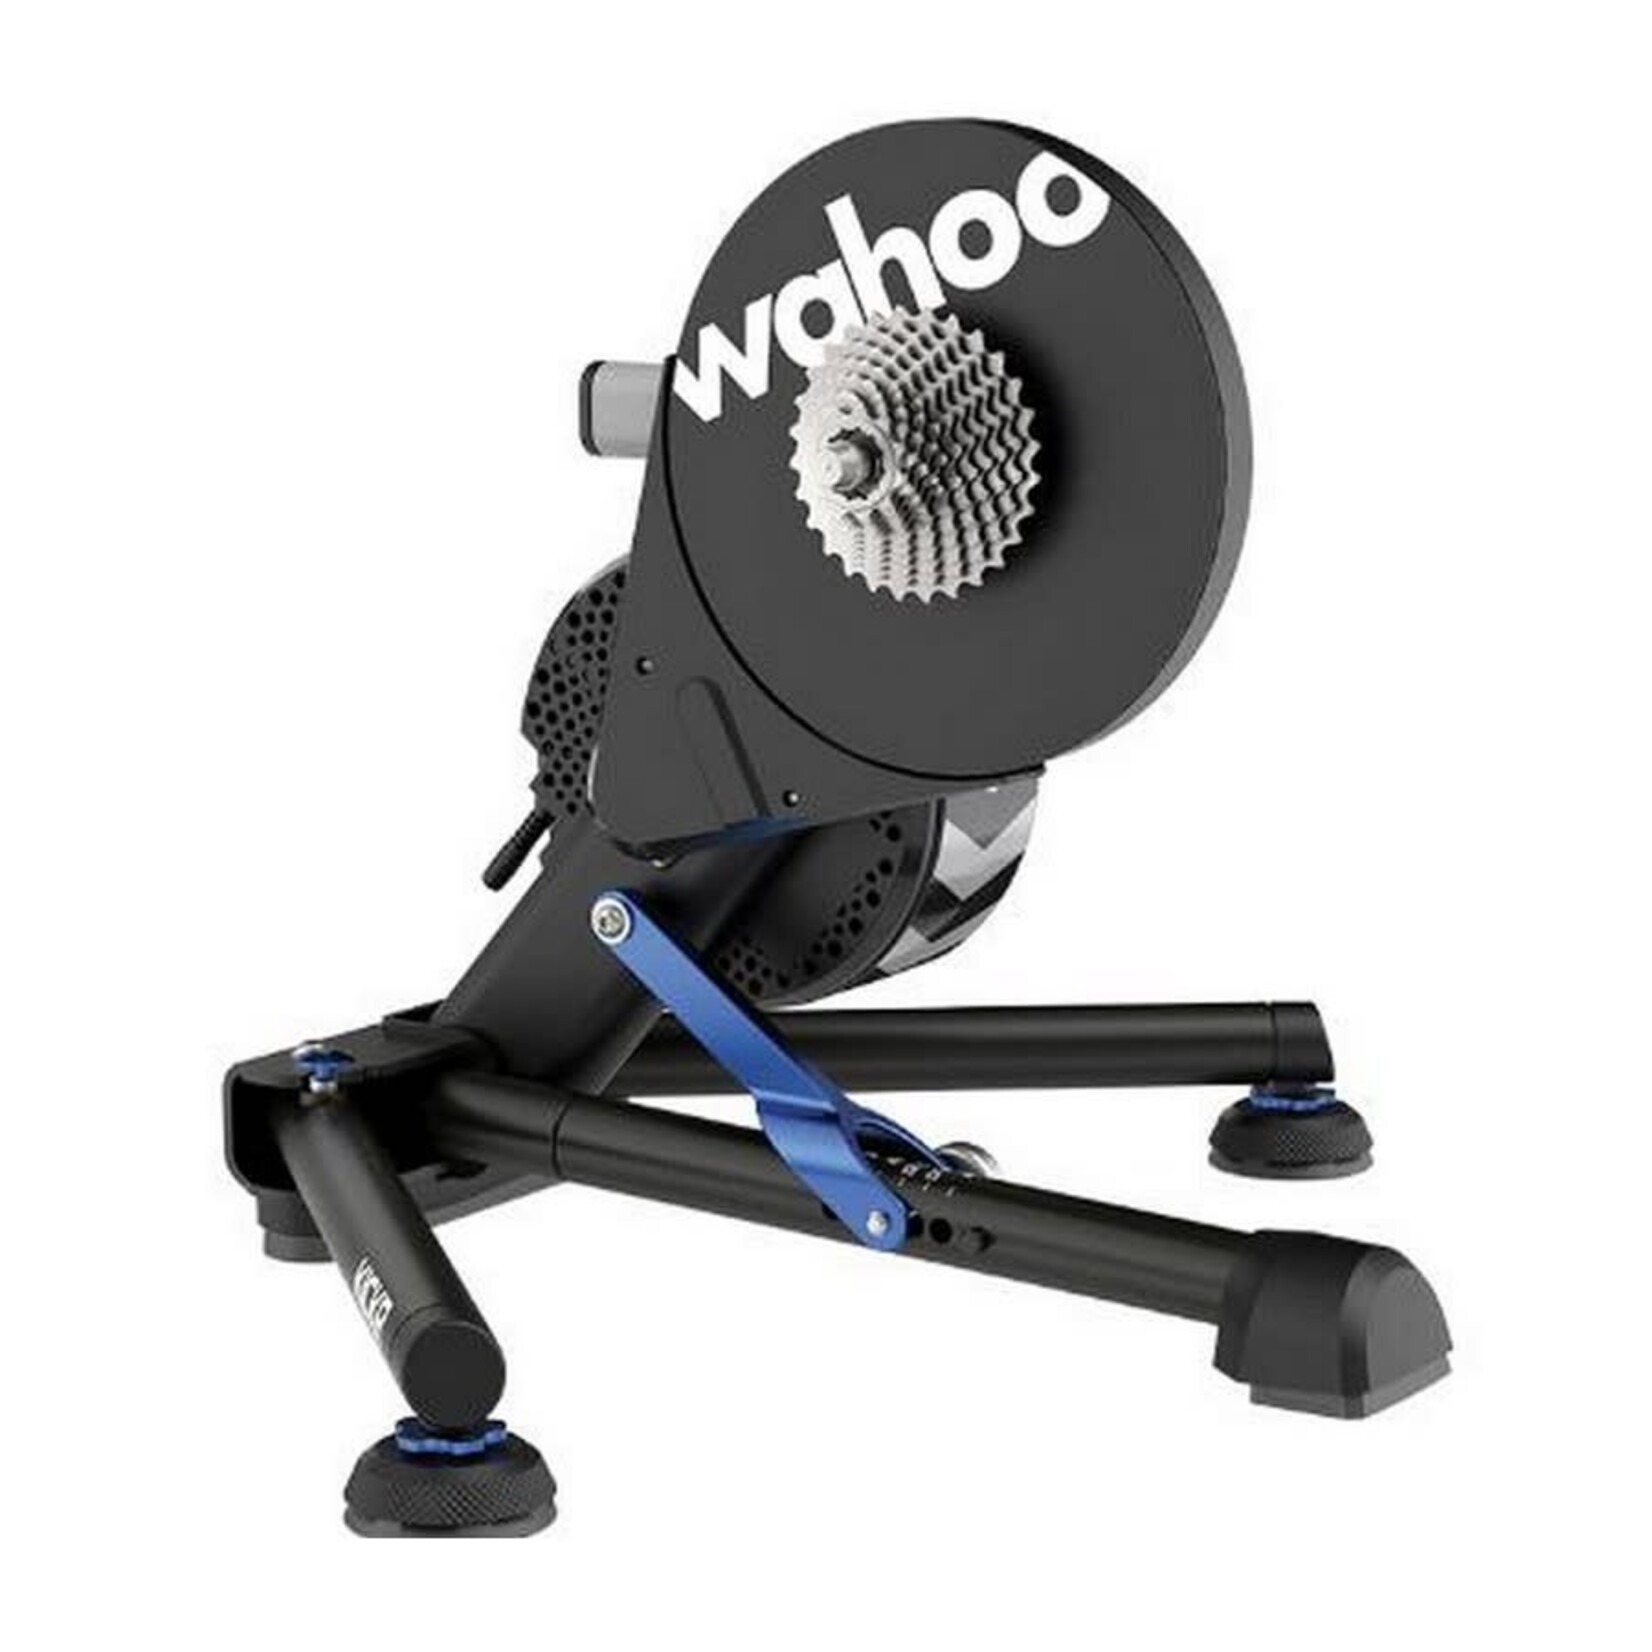 WAHOO WAHOO KICKR POWER TRAINER V5, Indoor Home Trainer